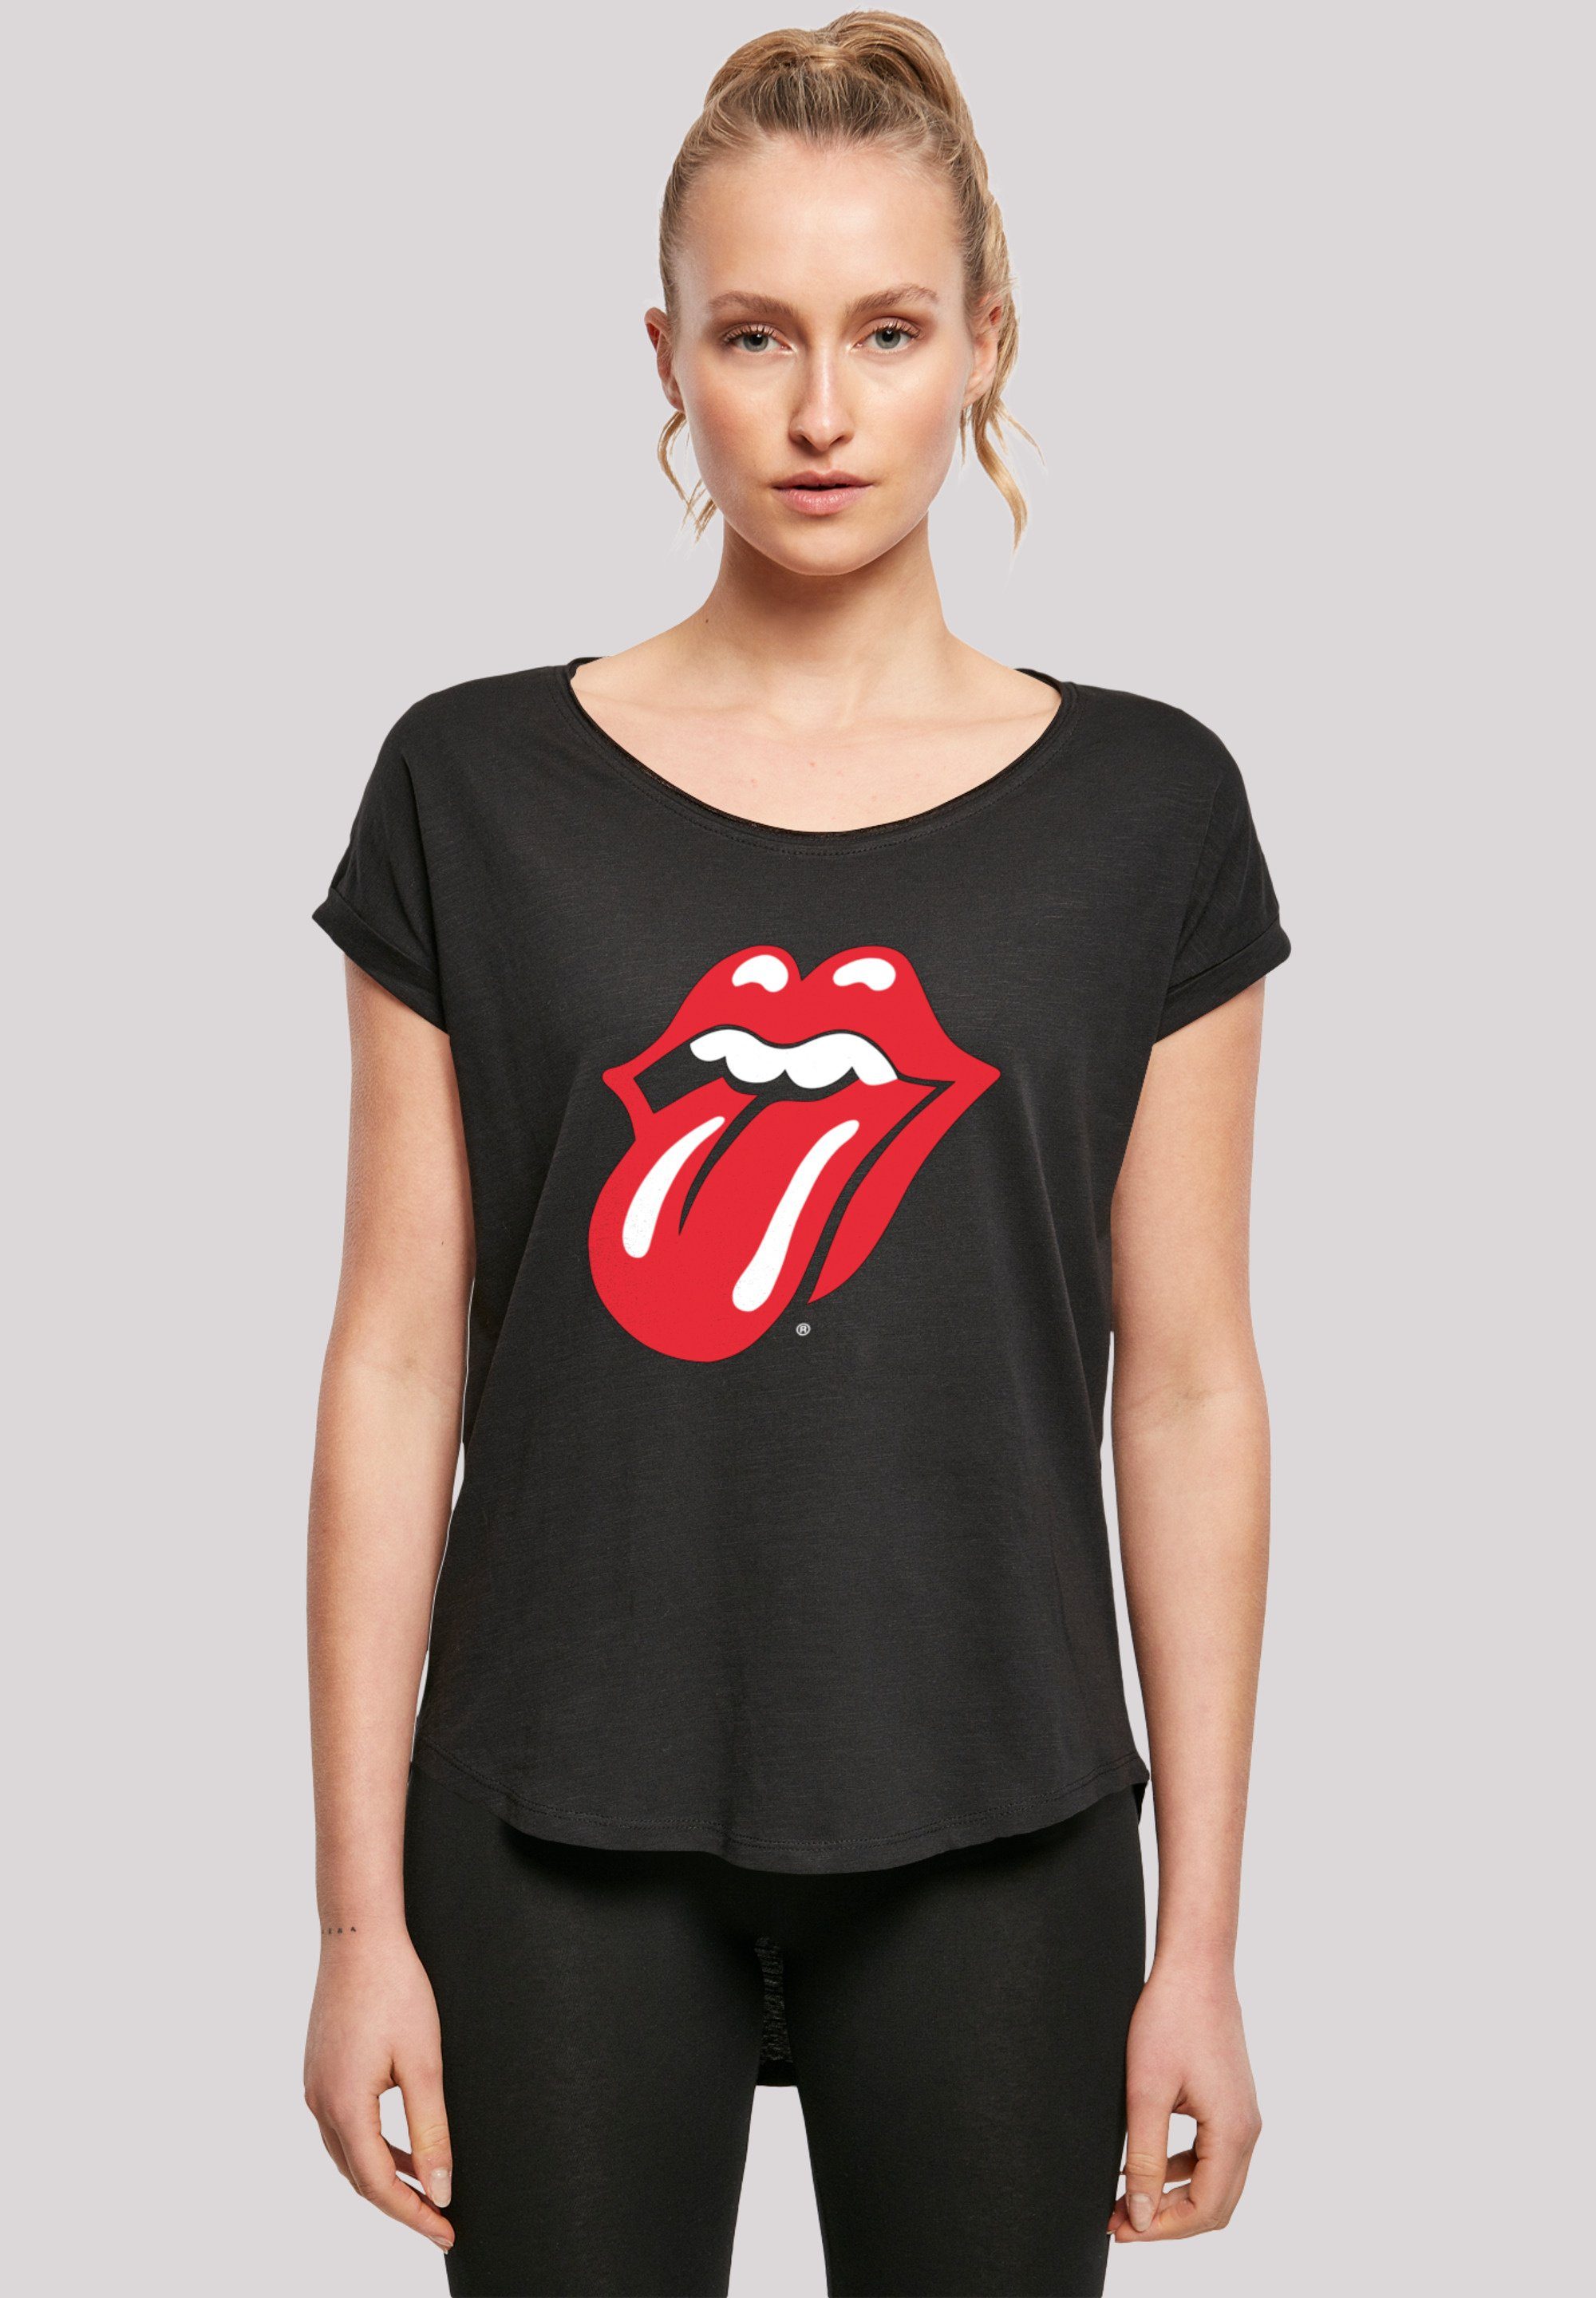 F4NT4STIC T-Shirt The Stones Black Baumwollstoff Sehr Rock hohem Rolling mit Classic Band Print, Tongue weicher Tragekomfort